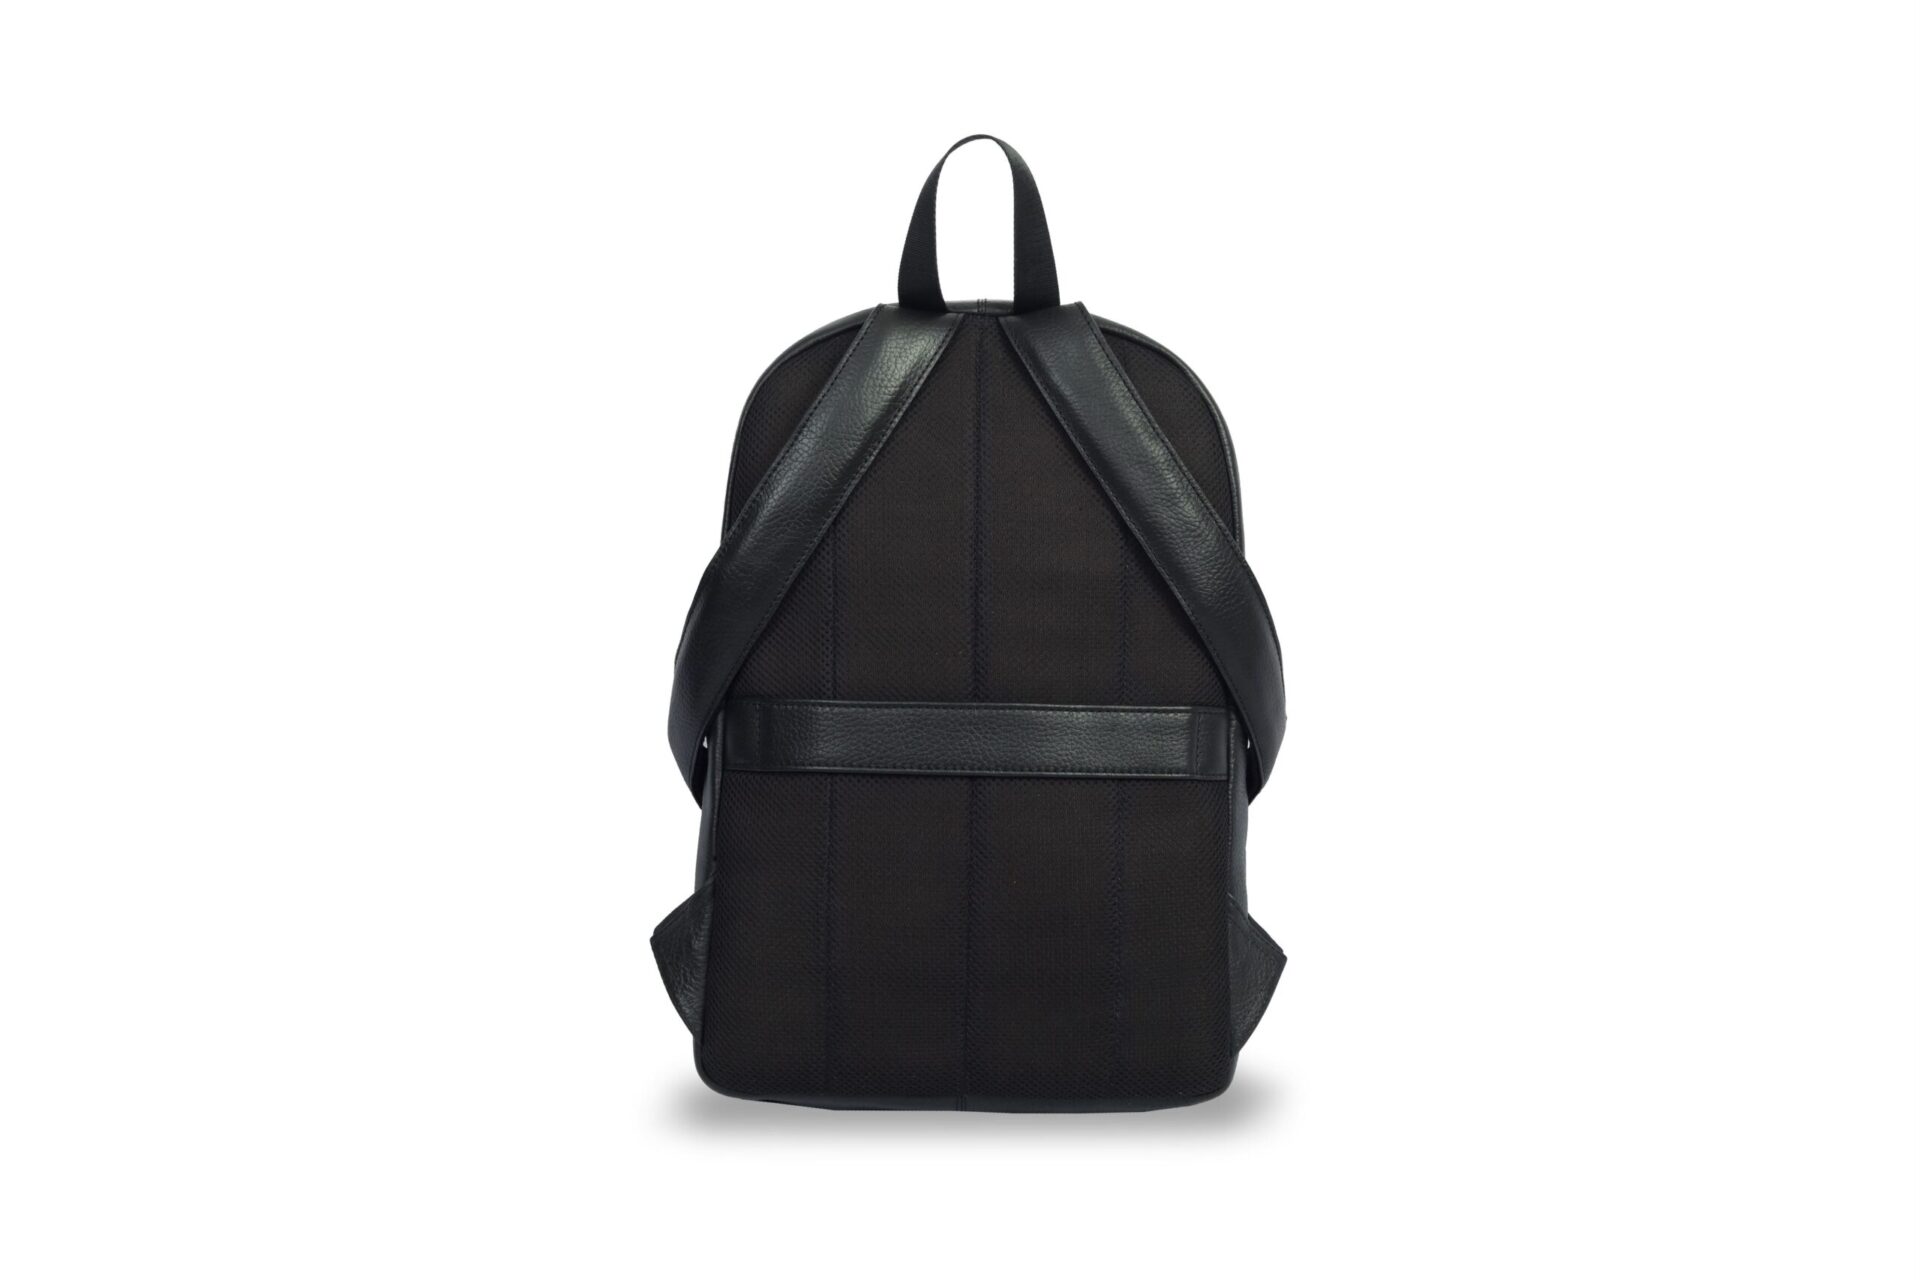 The Enchanting | Leather Backpack for Women/Men | Black Leather Laptop  Backpack